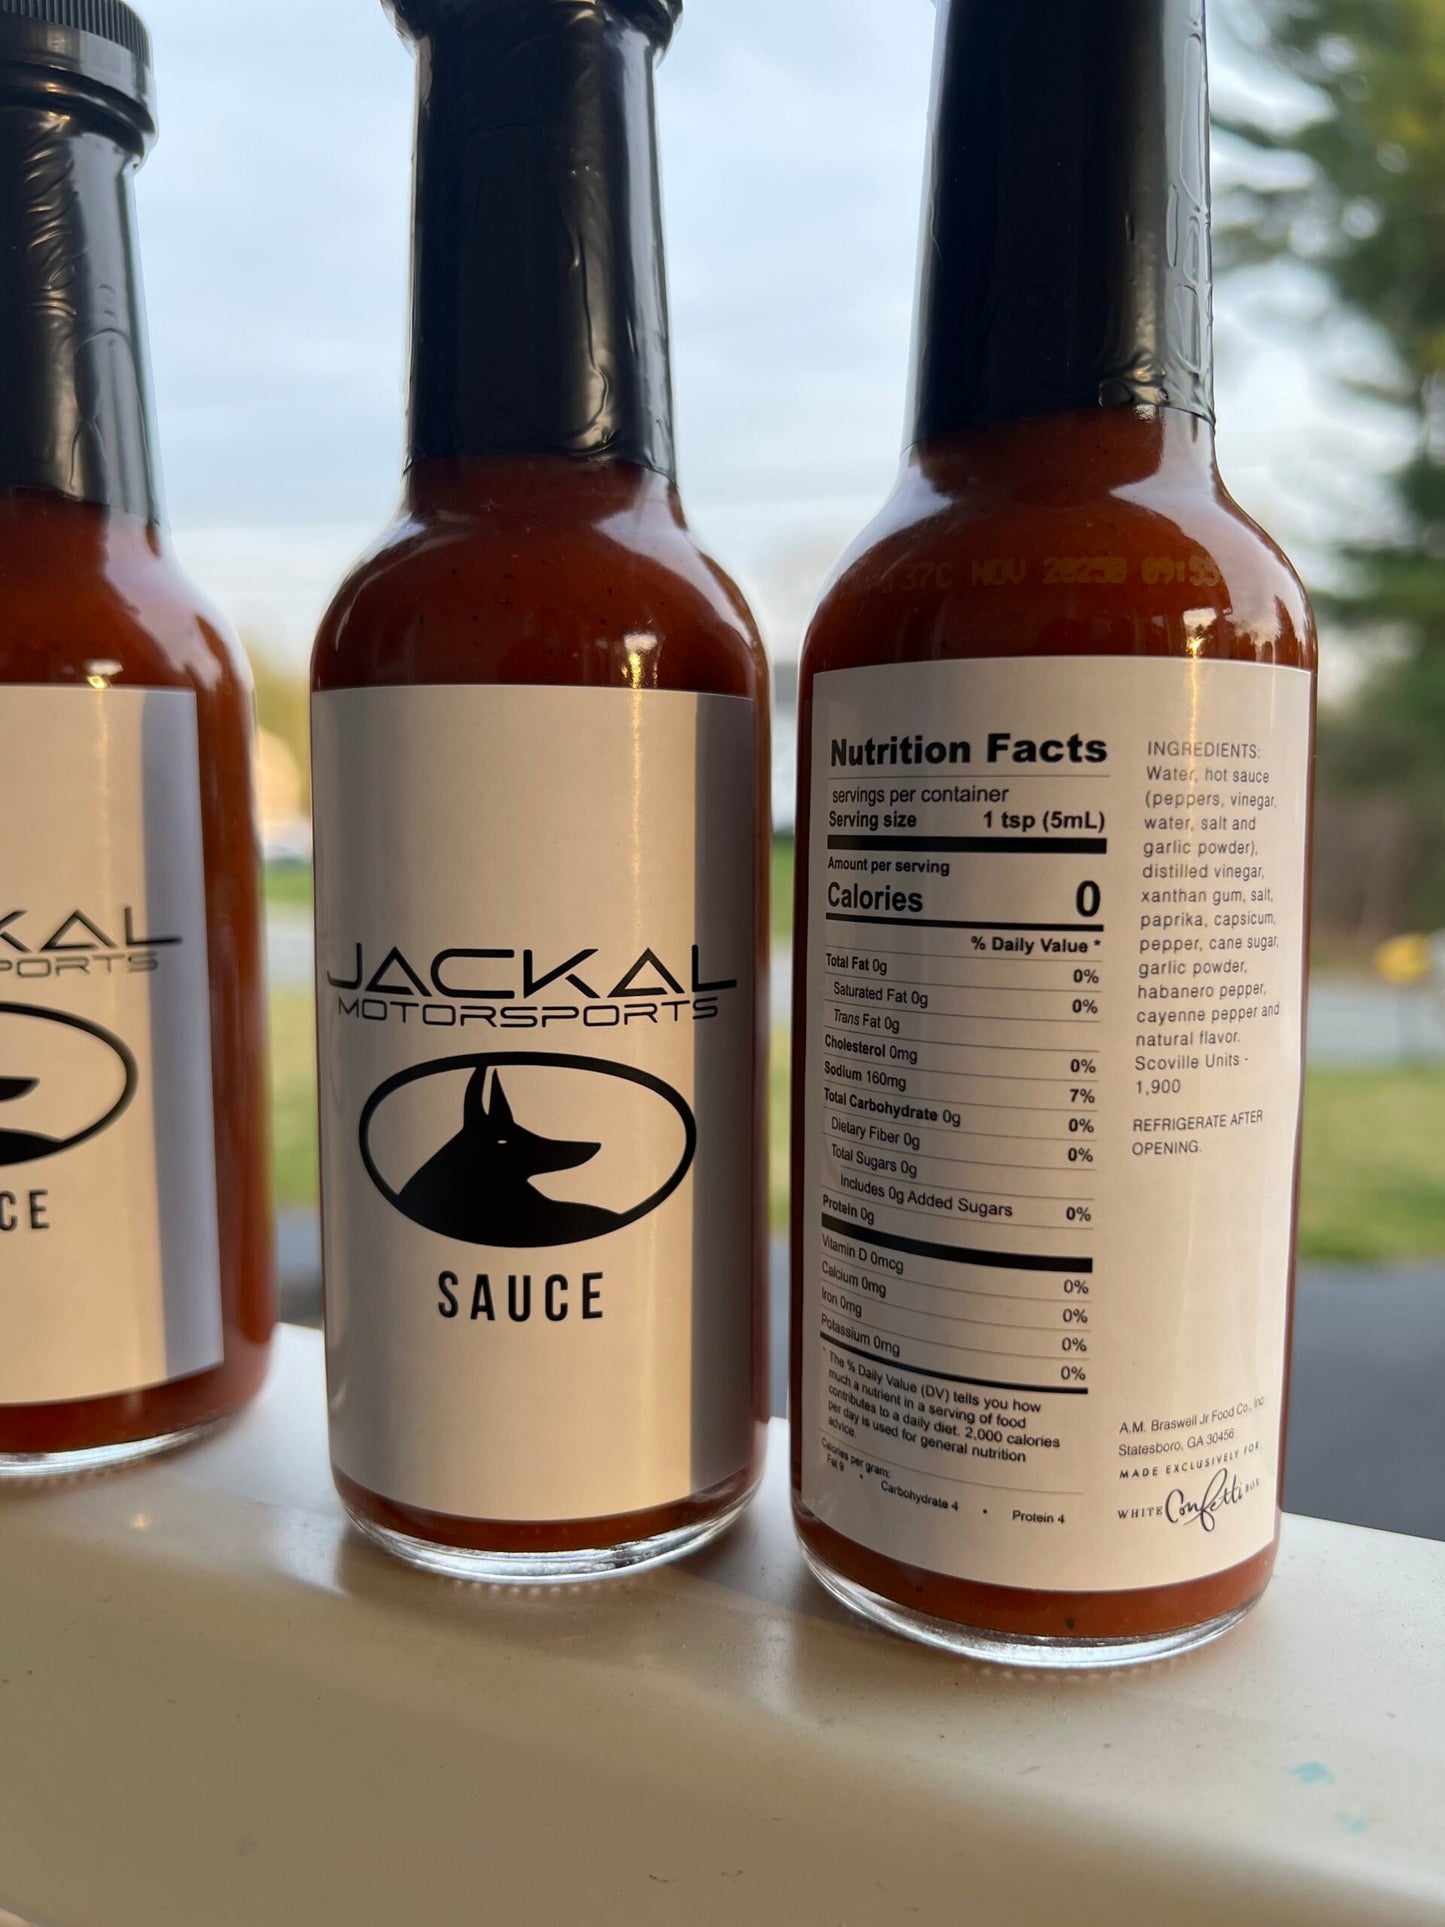 Limited Edition Jackal Sauce